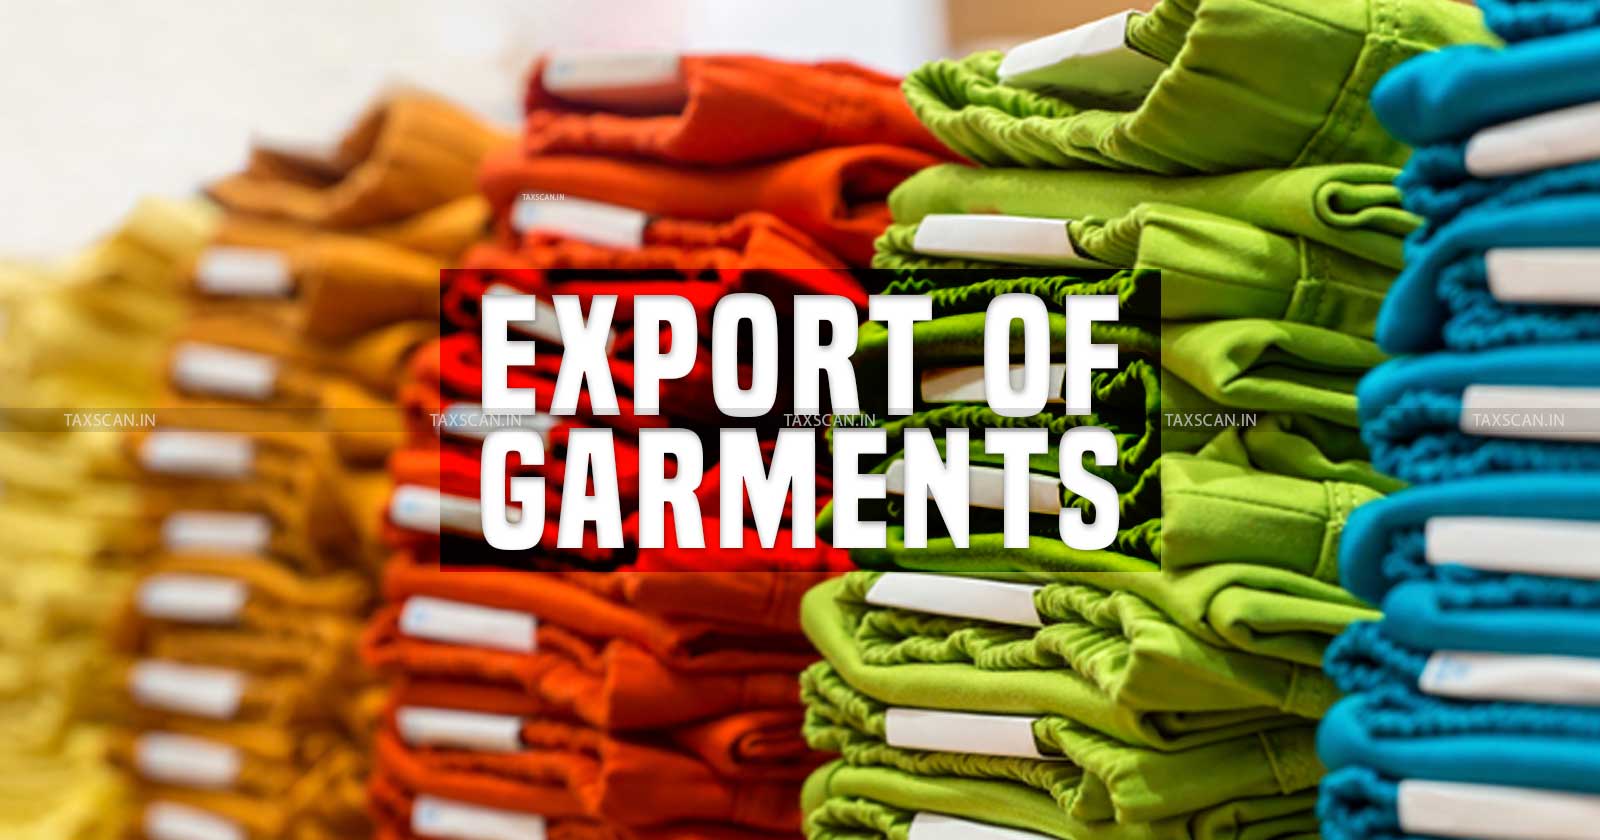 Cabinet - Extension - RoSCTL Scheme - Apparel - Garment Exports - taxscan